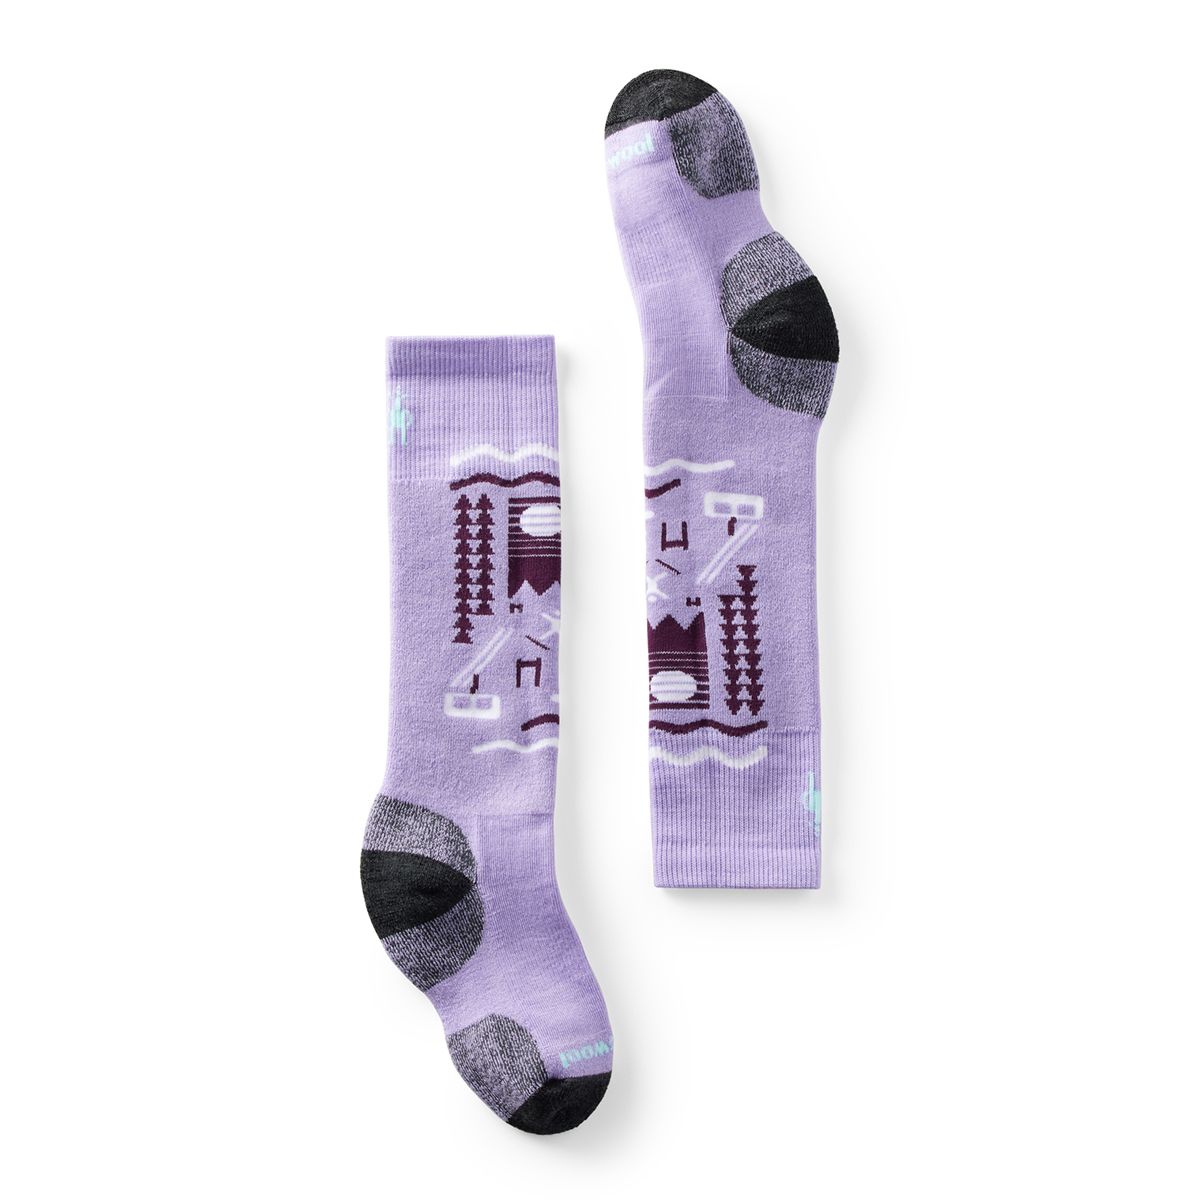 Ski Aunisex Cotton Ski Socks - Warm Thermal Stockings For Skiing